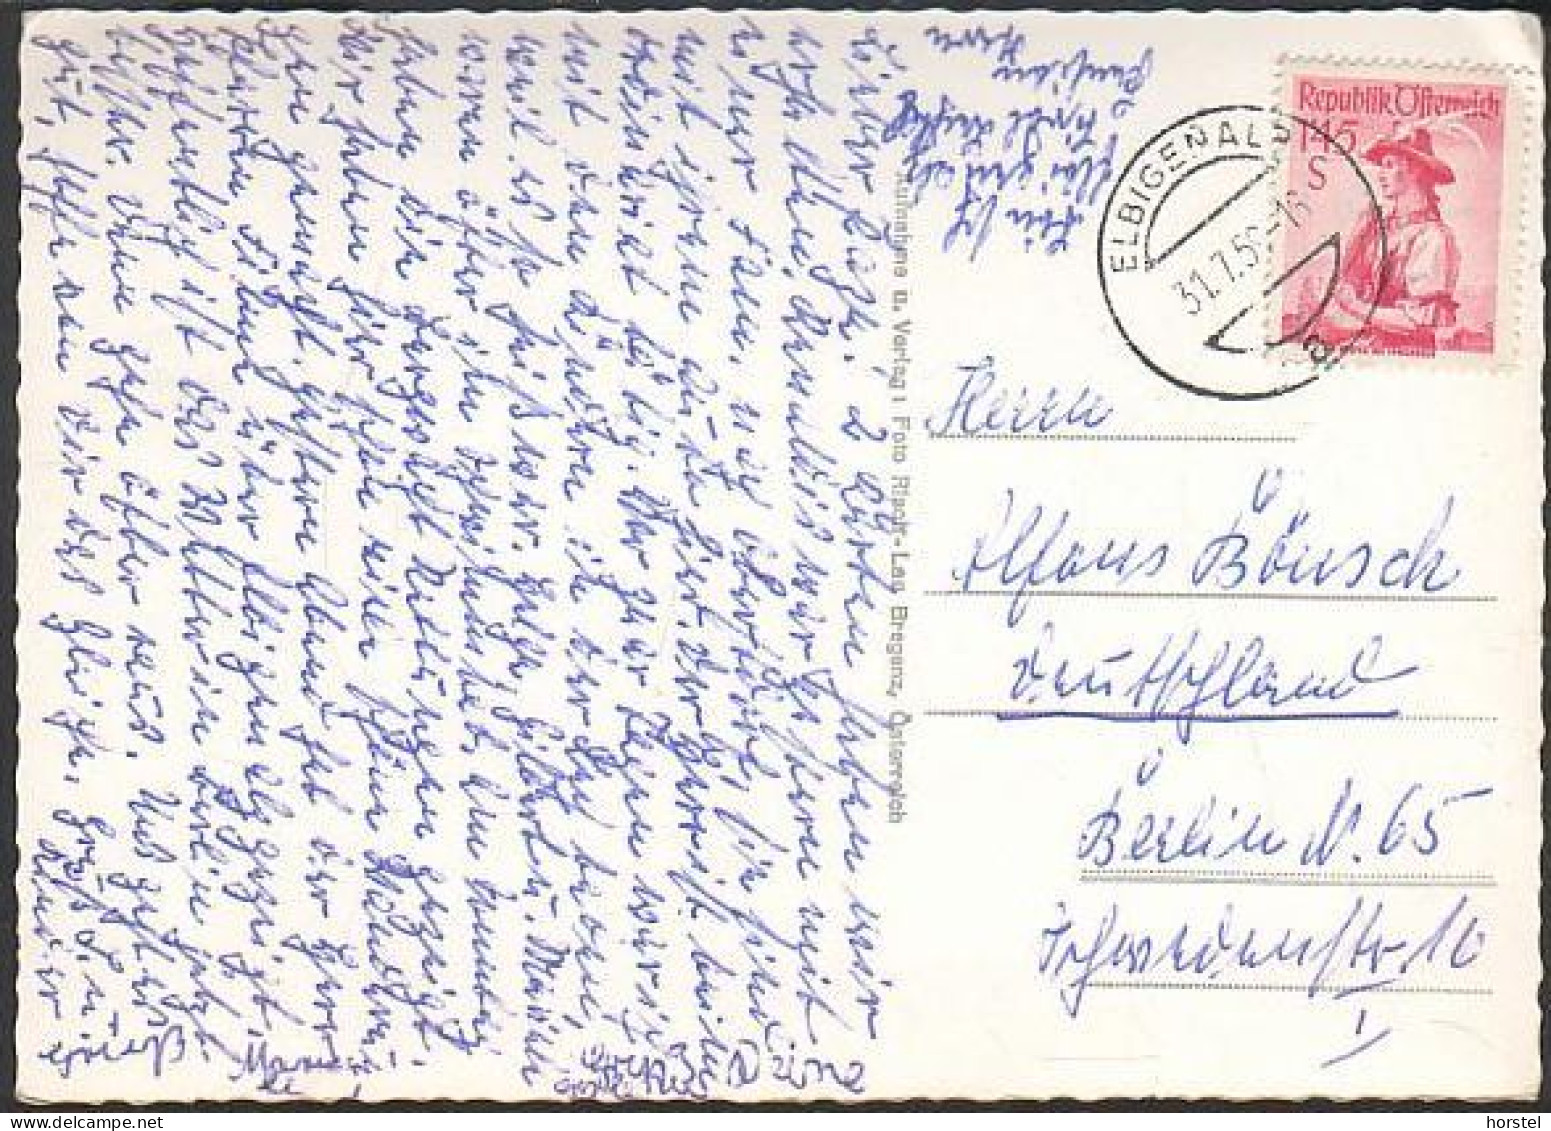 Austria - 6652 Elbigenalp - Alte Ortsansicht Im Lechtal Gegen Hornbachkette - Nice Stamp 1959 - Reutte